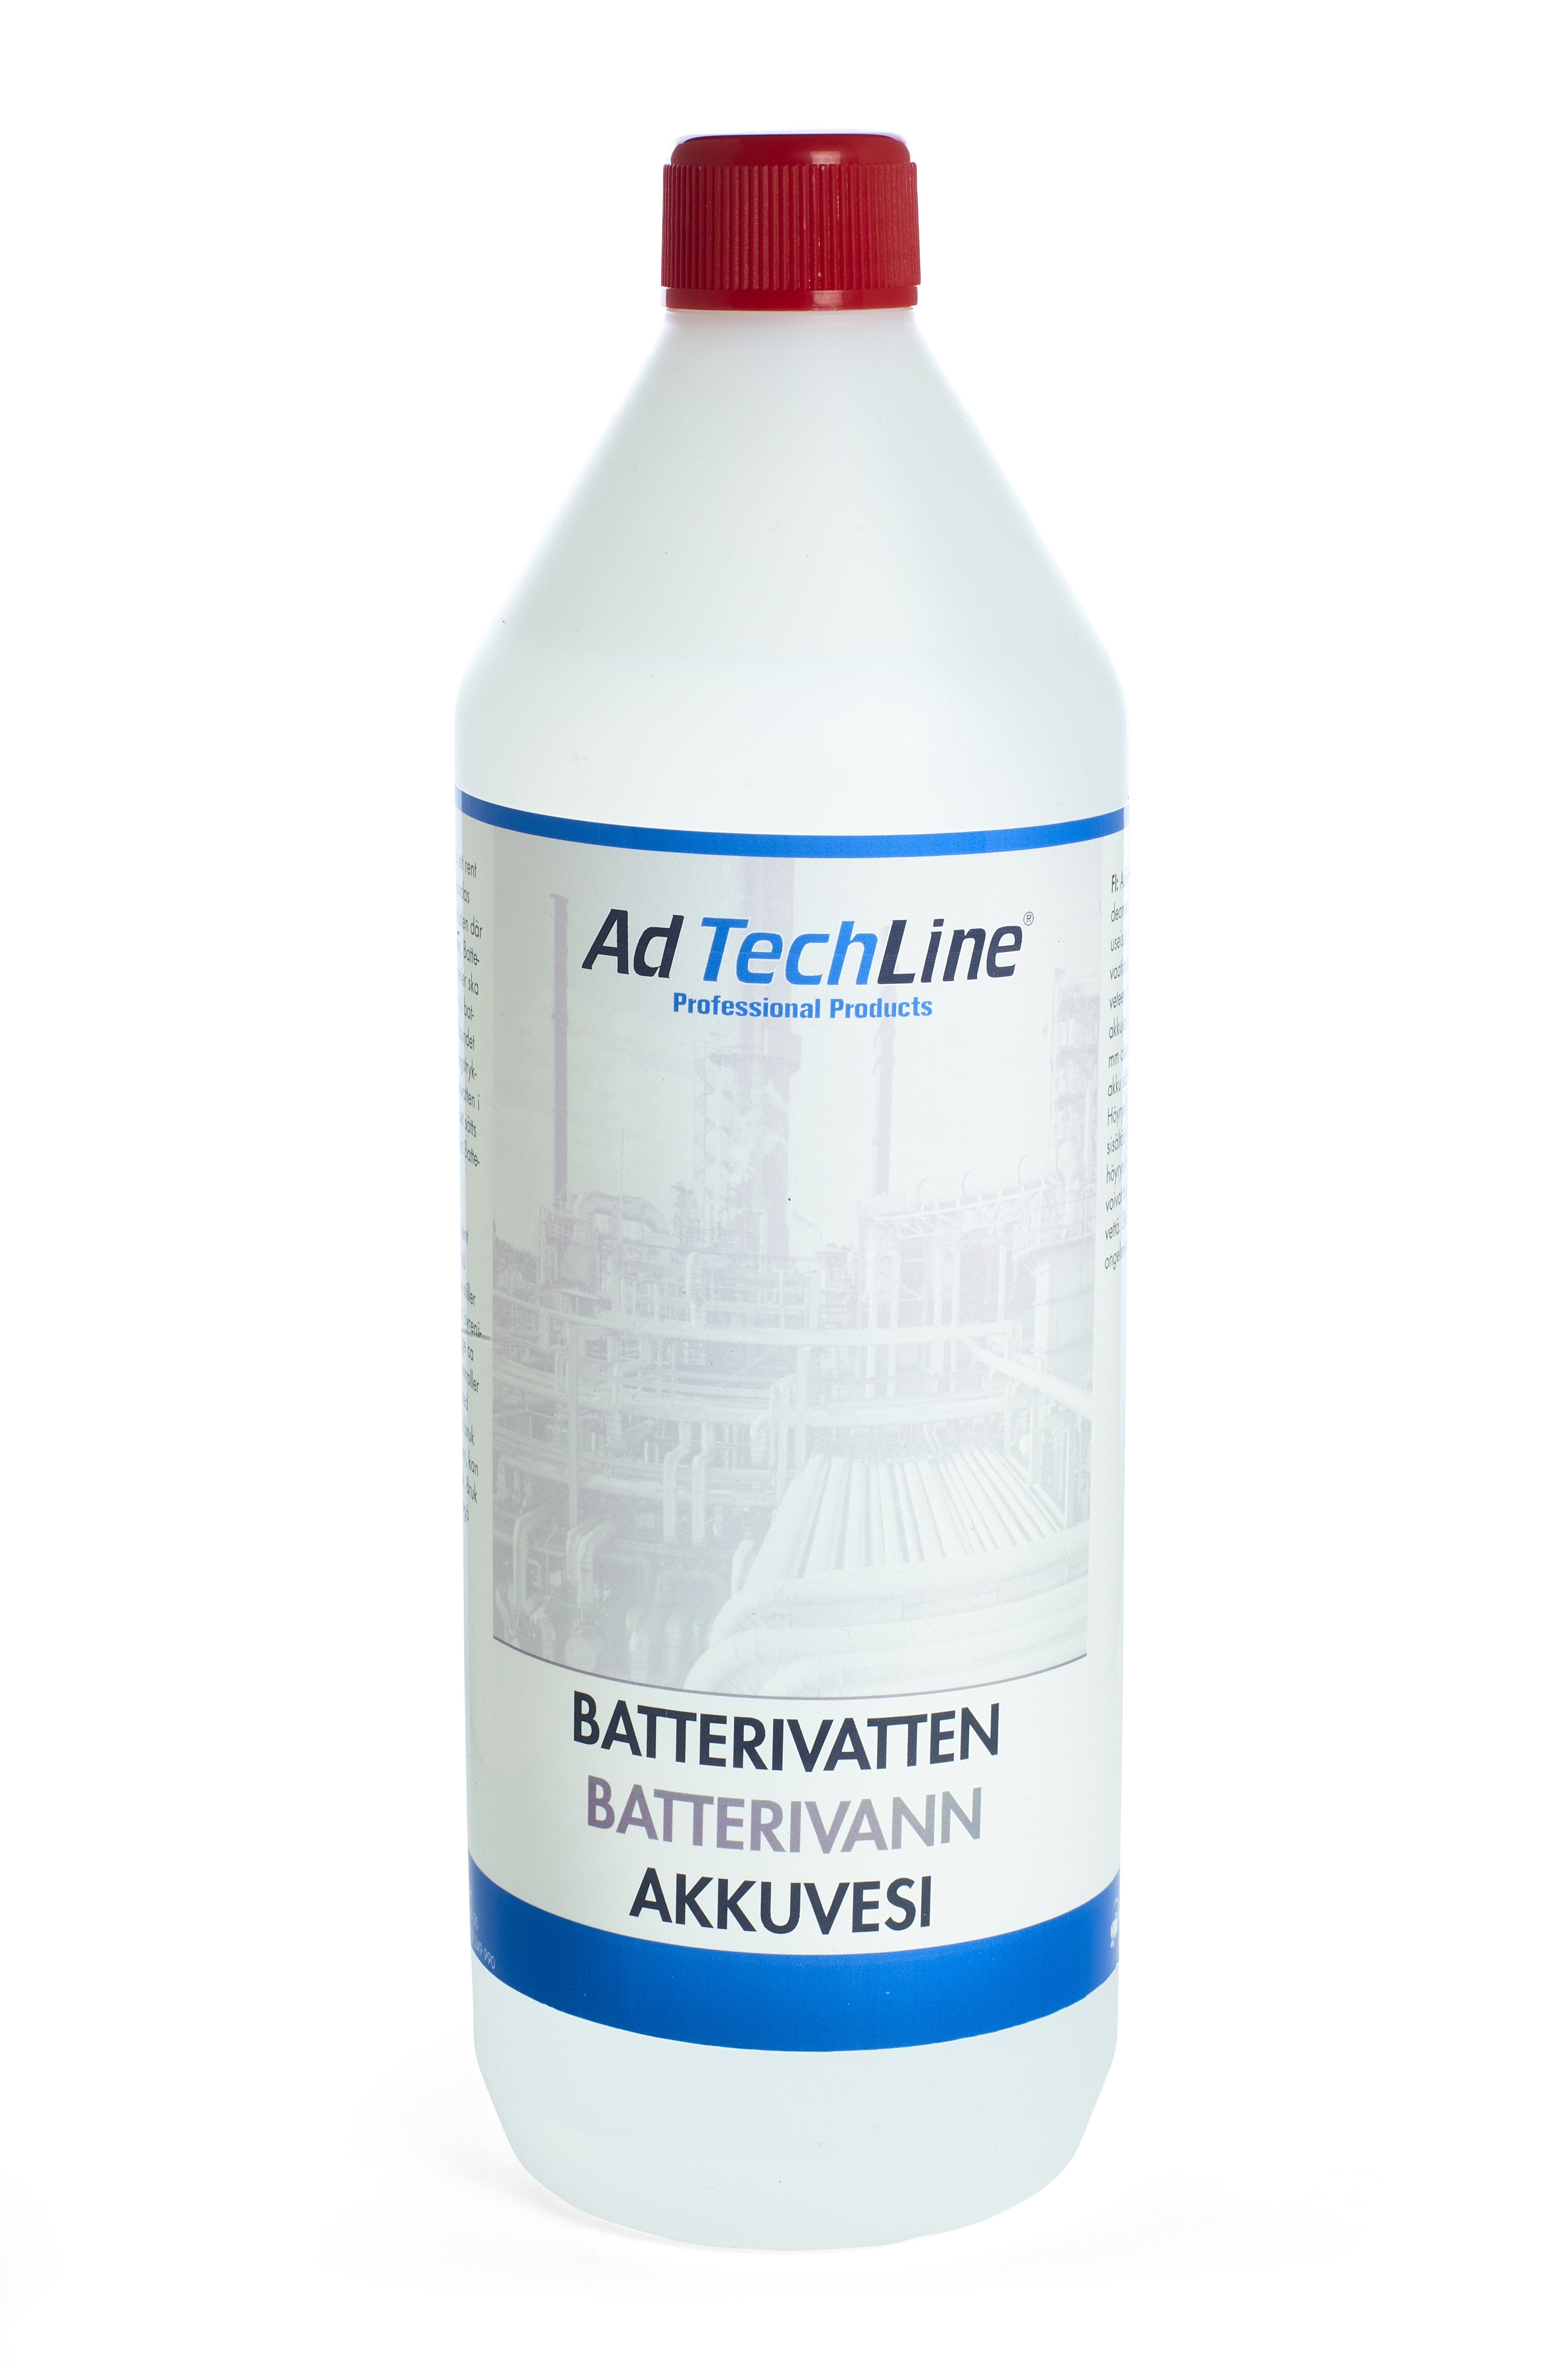 AddTechline Batterivatten,1 liter flaska-image